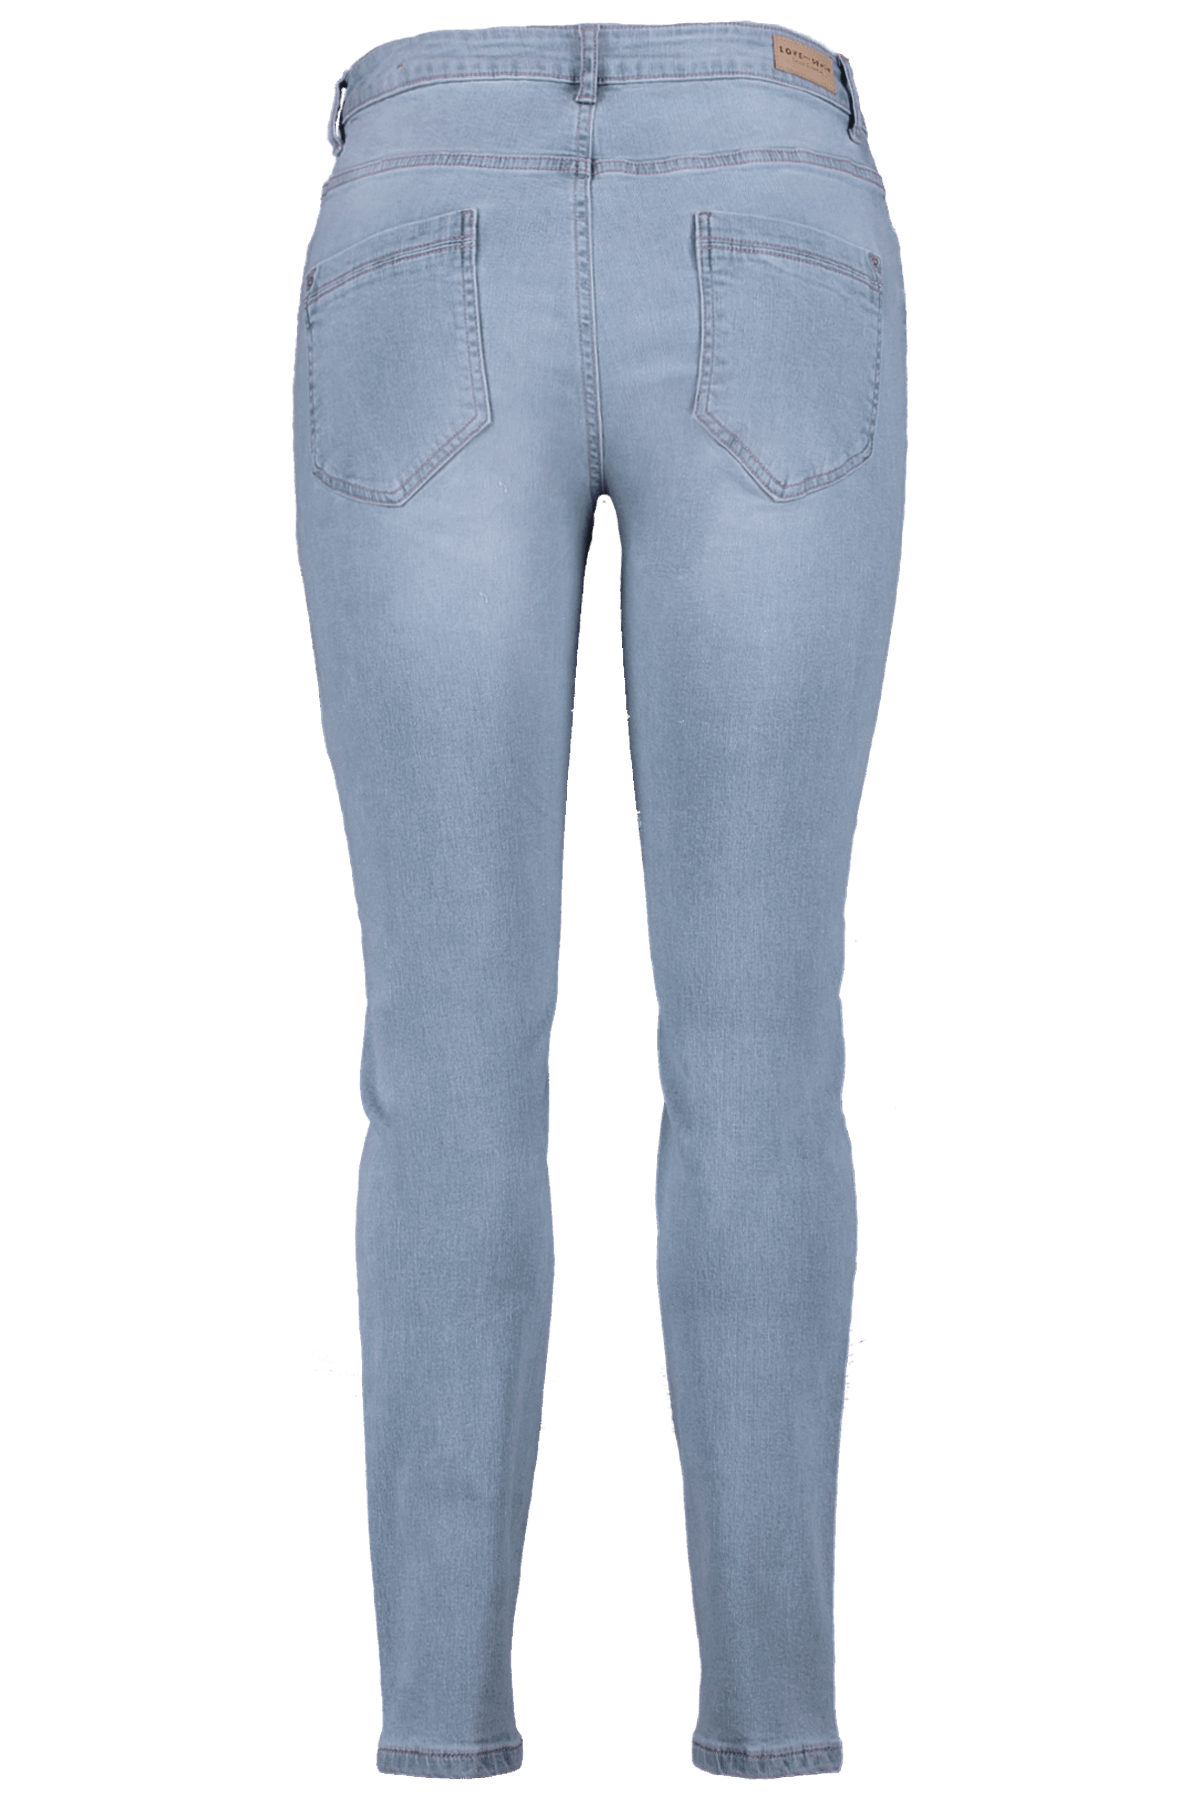 IRIS Slim-Leg Jeans image 2